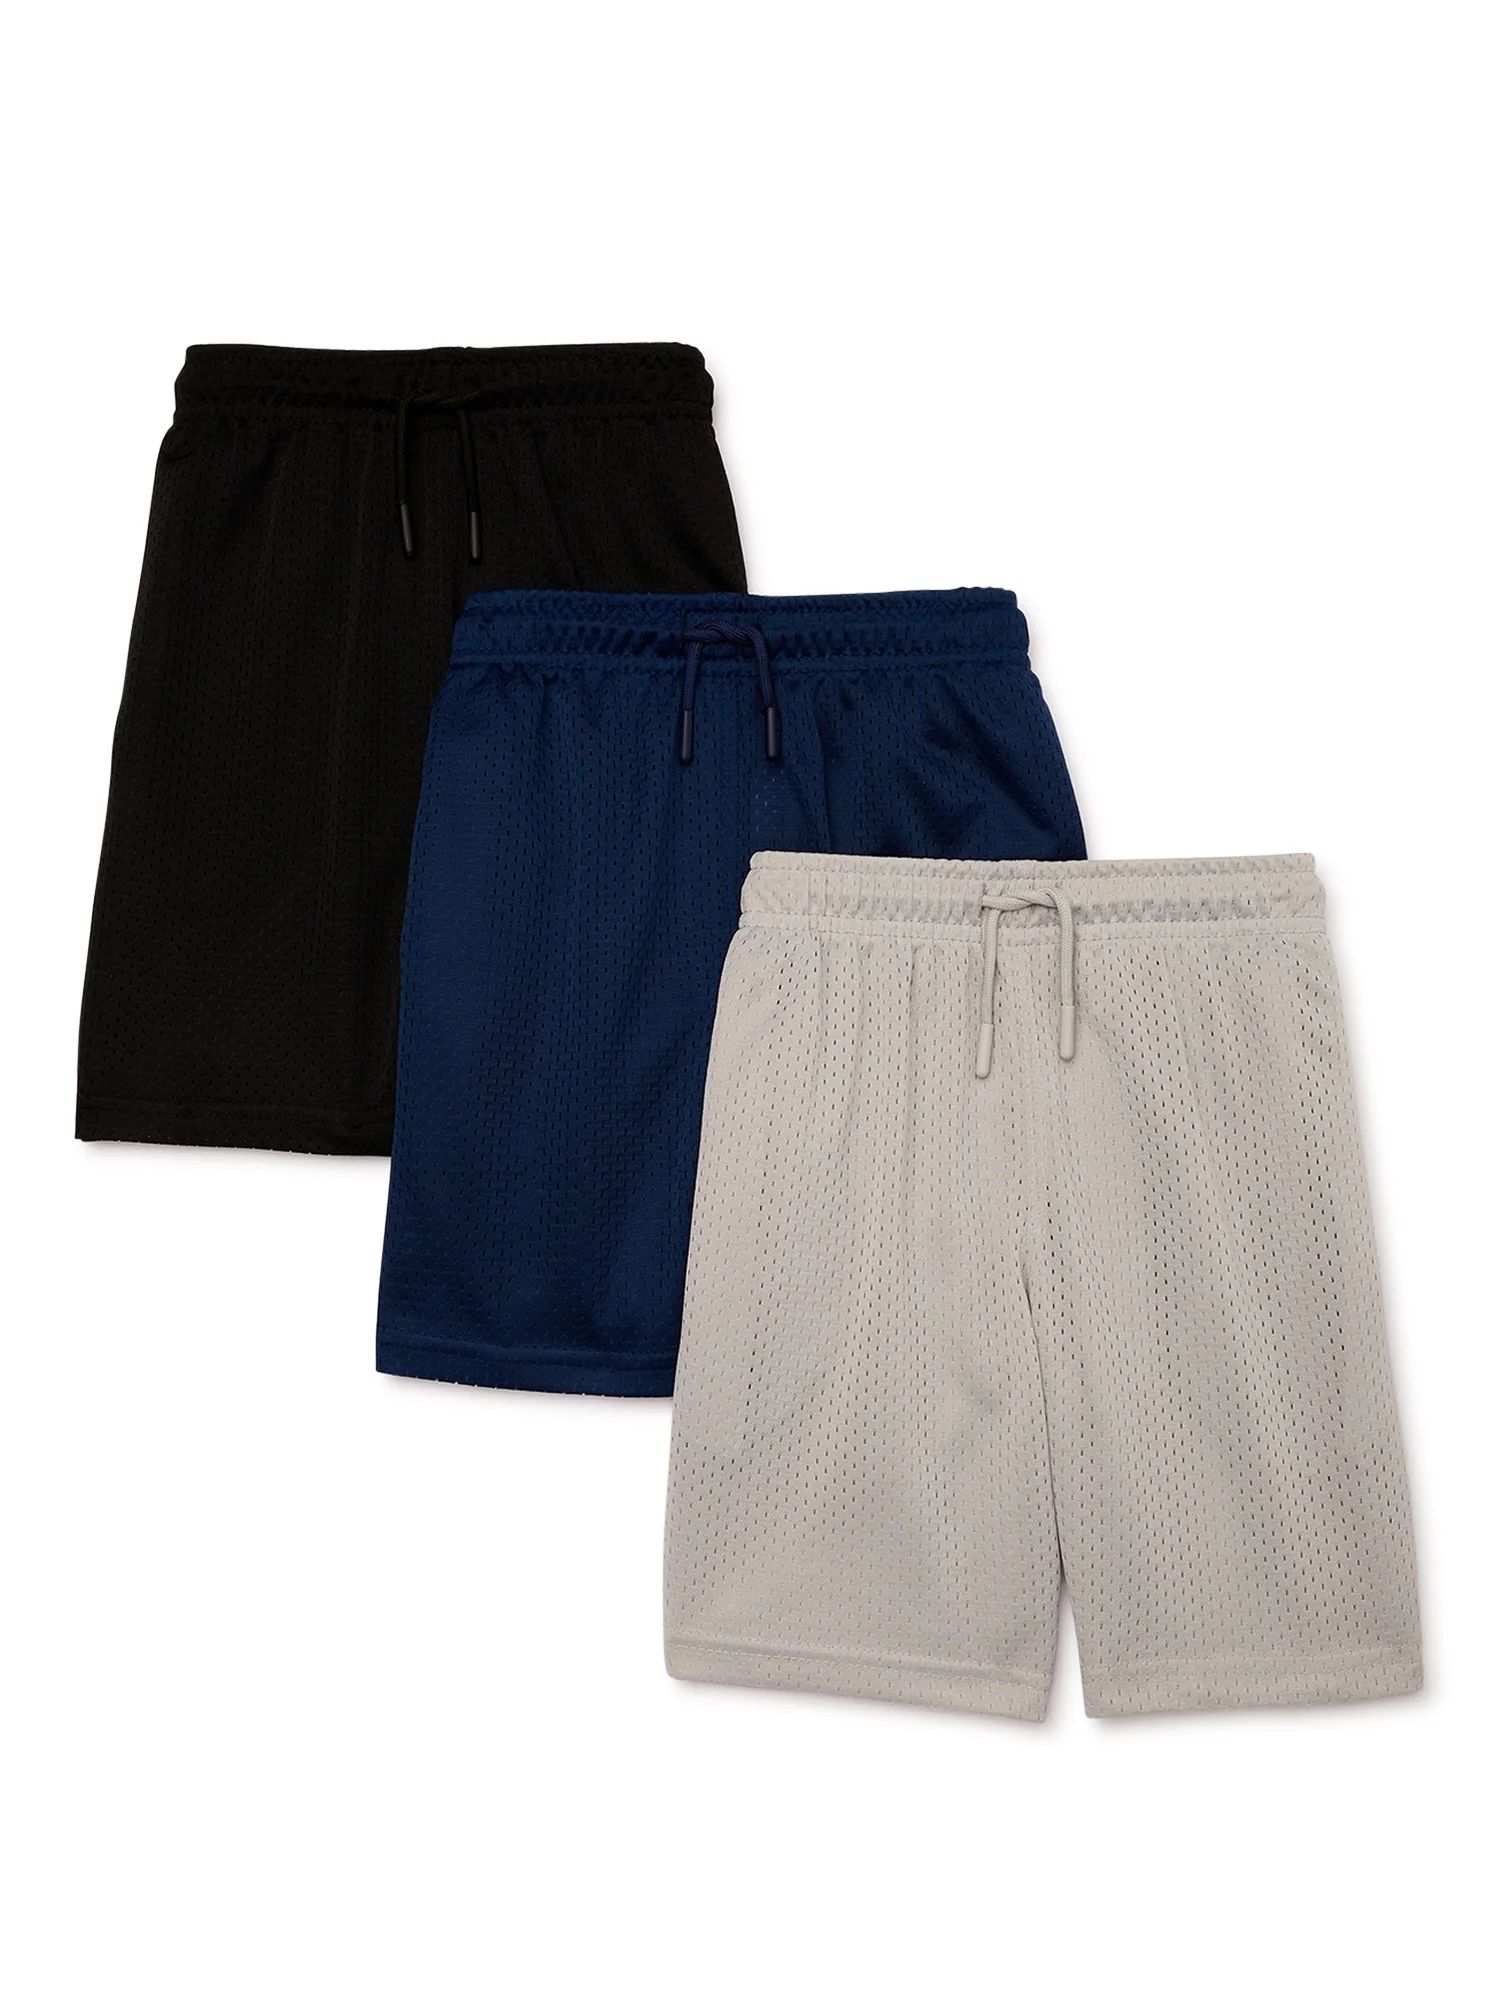 Athletic Works Boys Active Mesh Shorts, 3-Pack, Sizes 4-18 & Husky | Walmart (US)